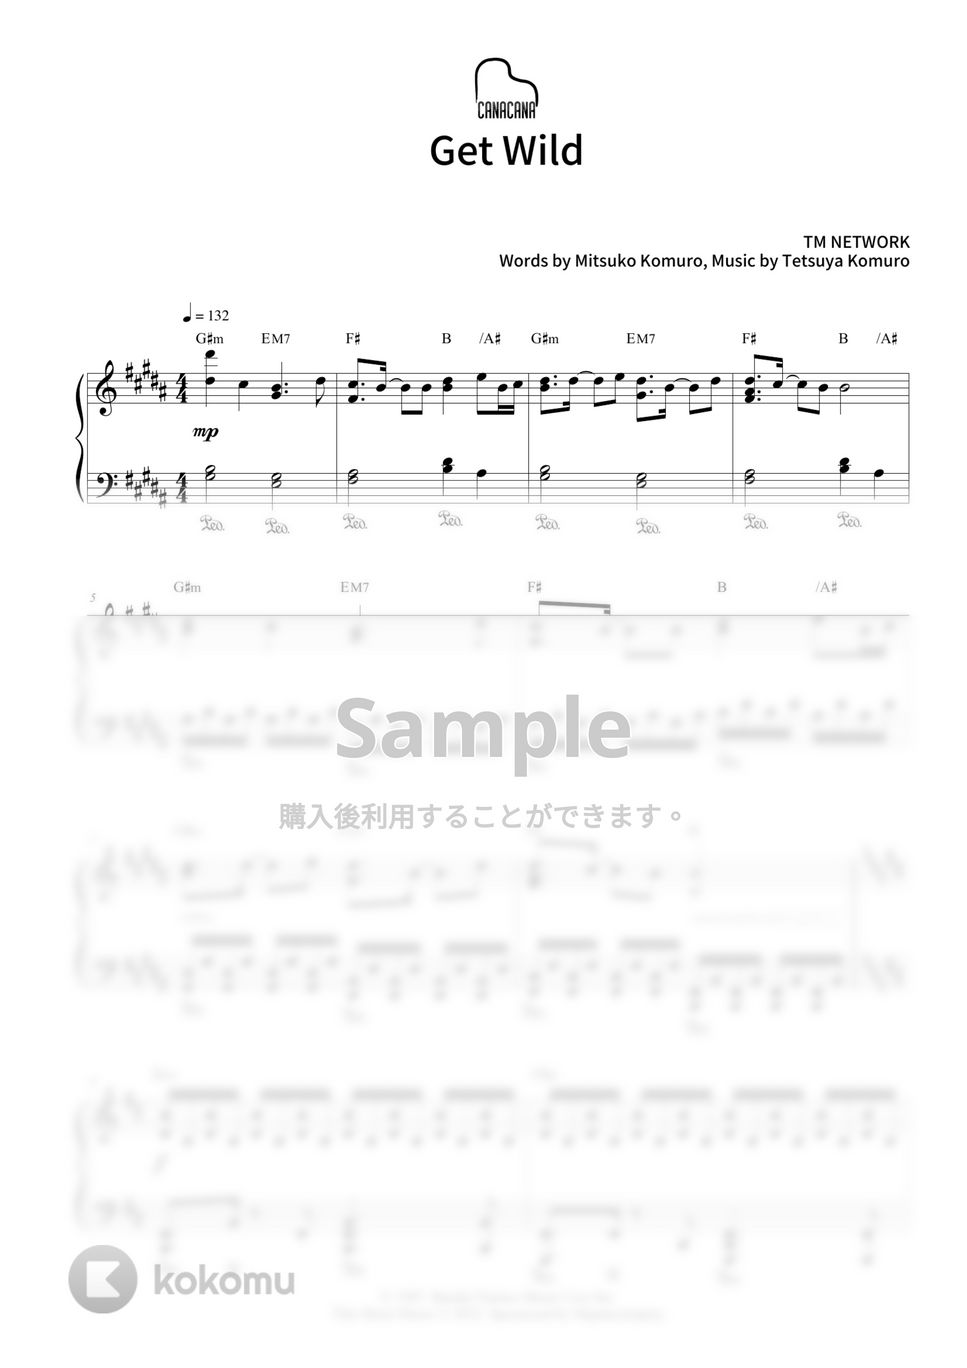 TM NETWORK - GET WILD (シティハンターED) by CANACANA family